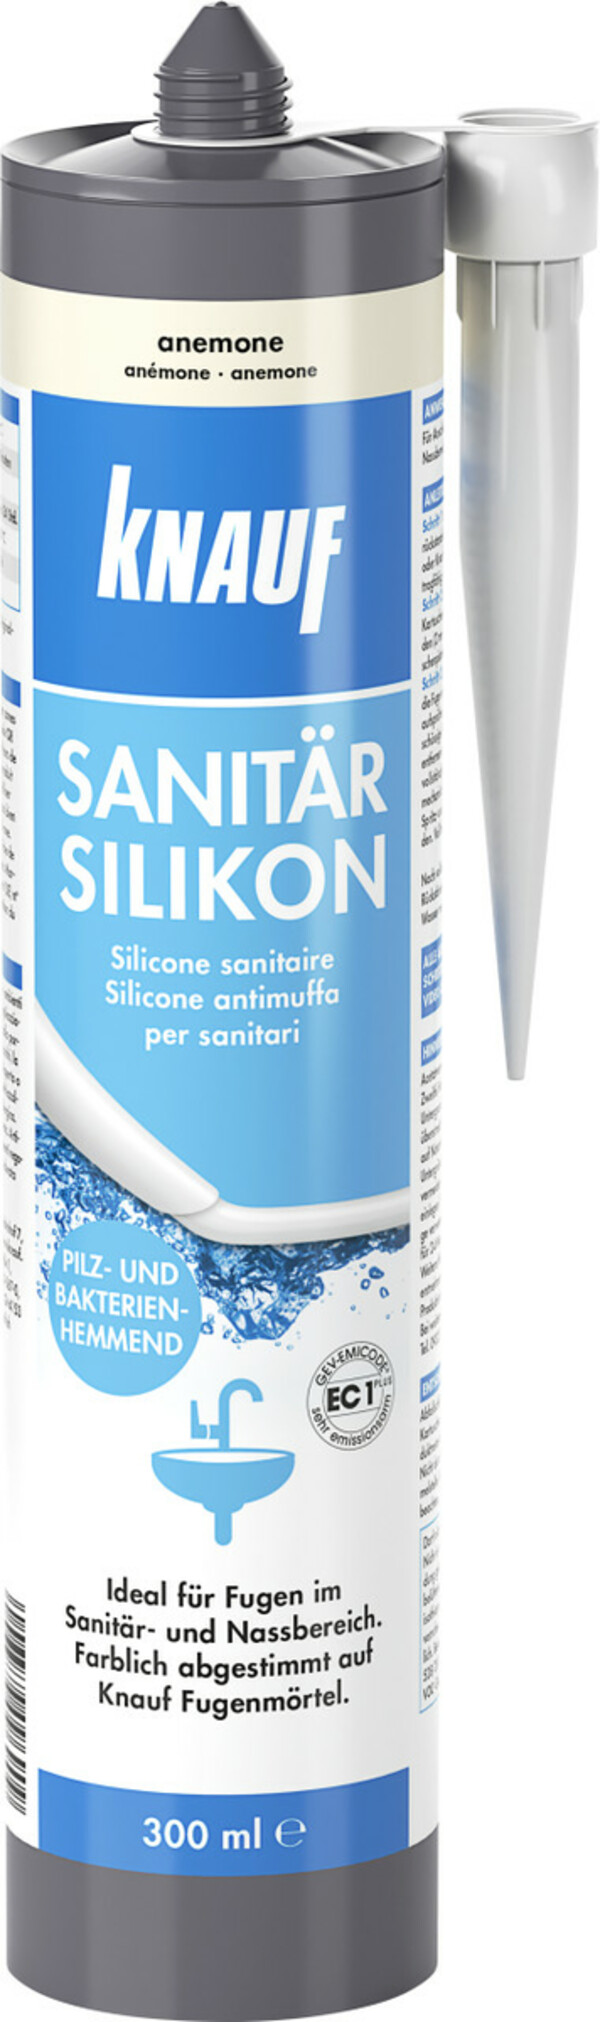 Bild 1 von Knauf Sanitär-Silikon
, 
anemone, 300 ml